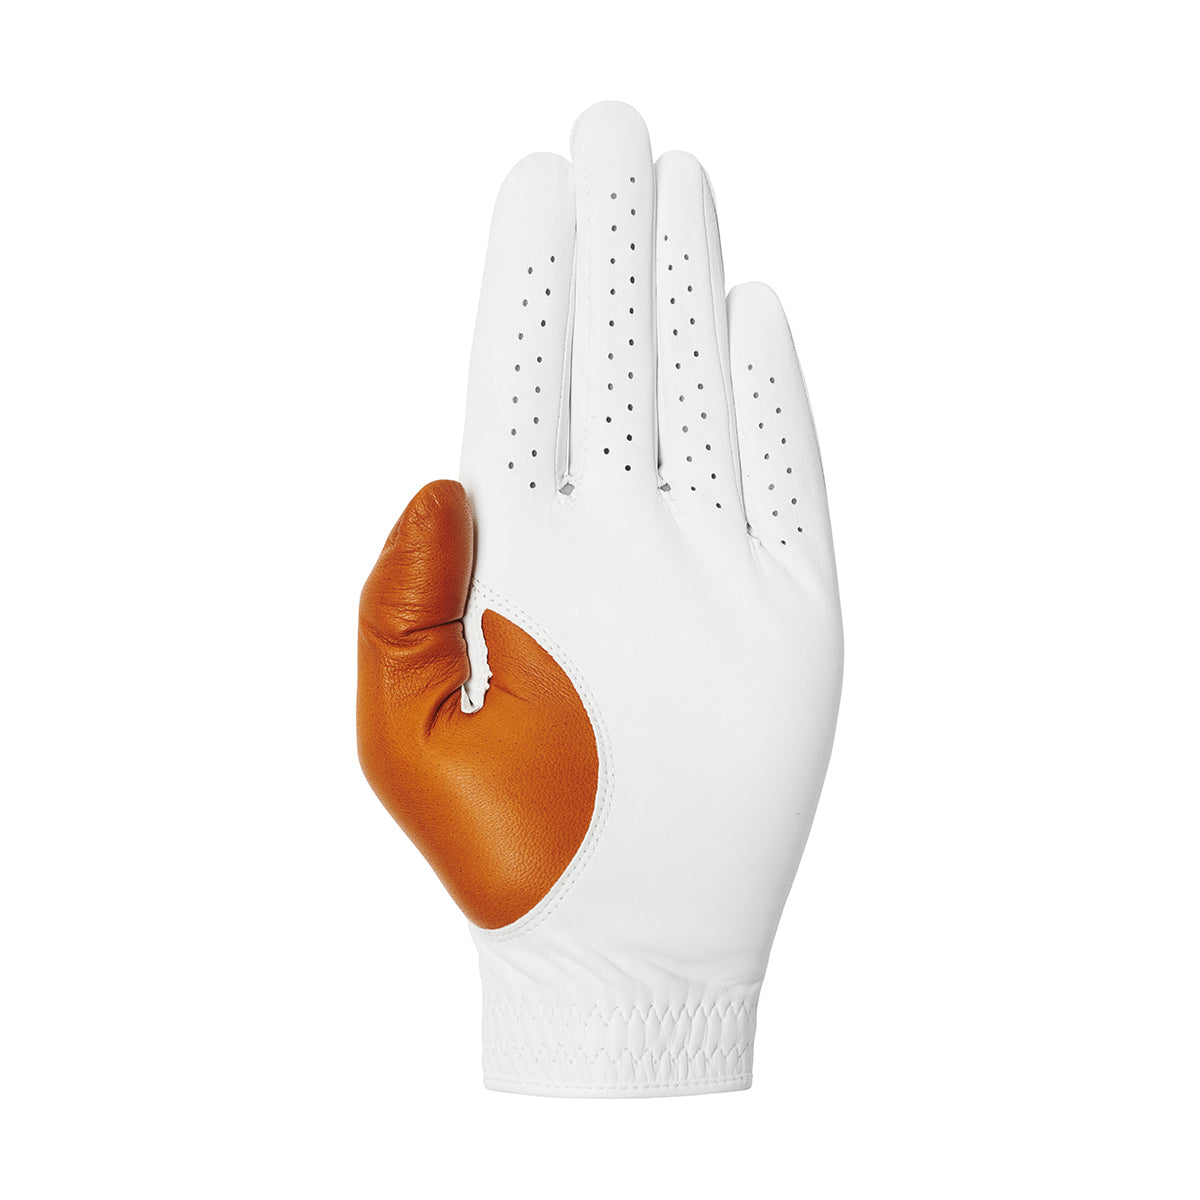 Men's Golf Glove Left Elite Pro Laguna White/Cognac